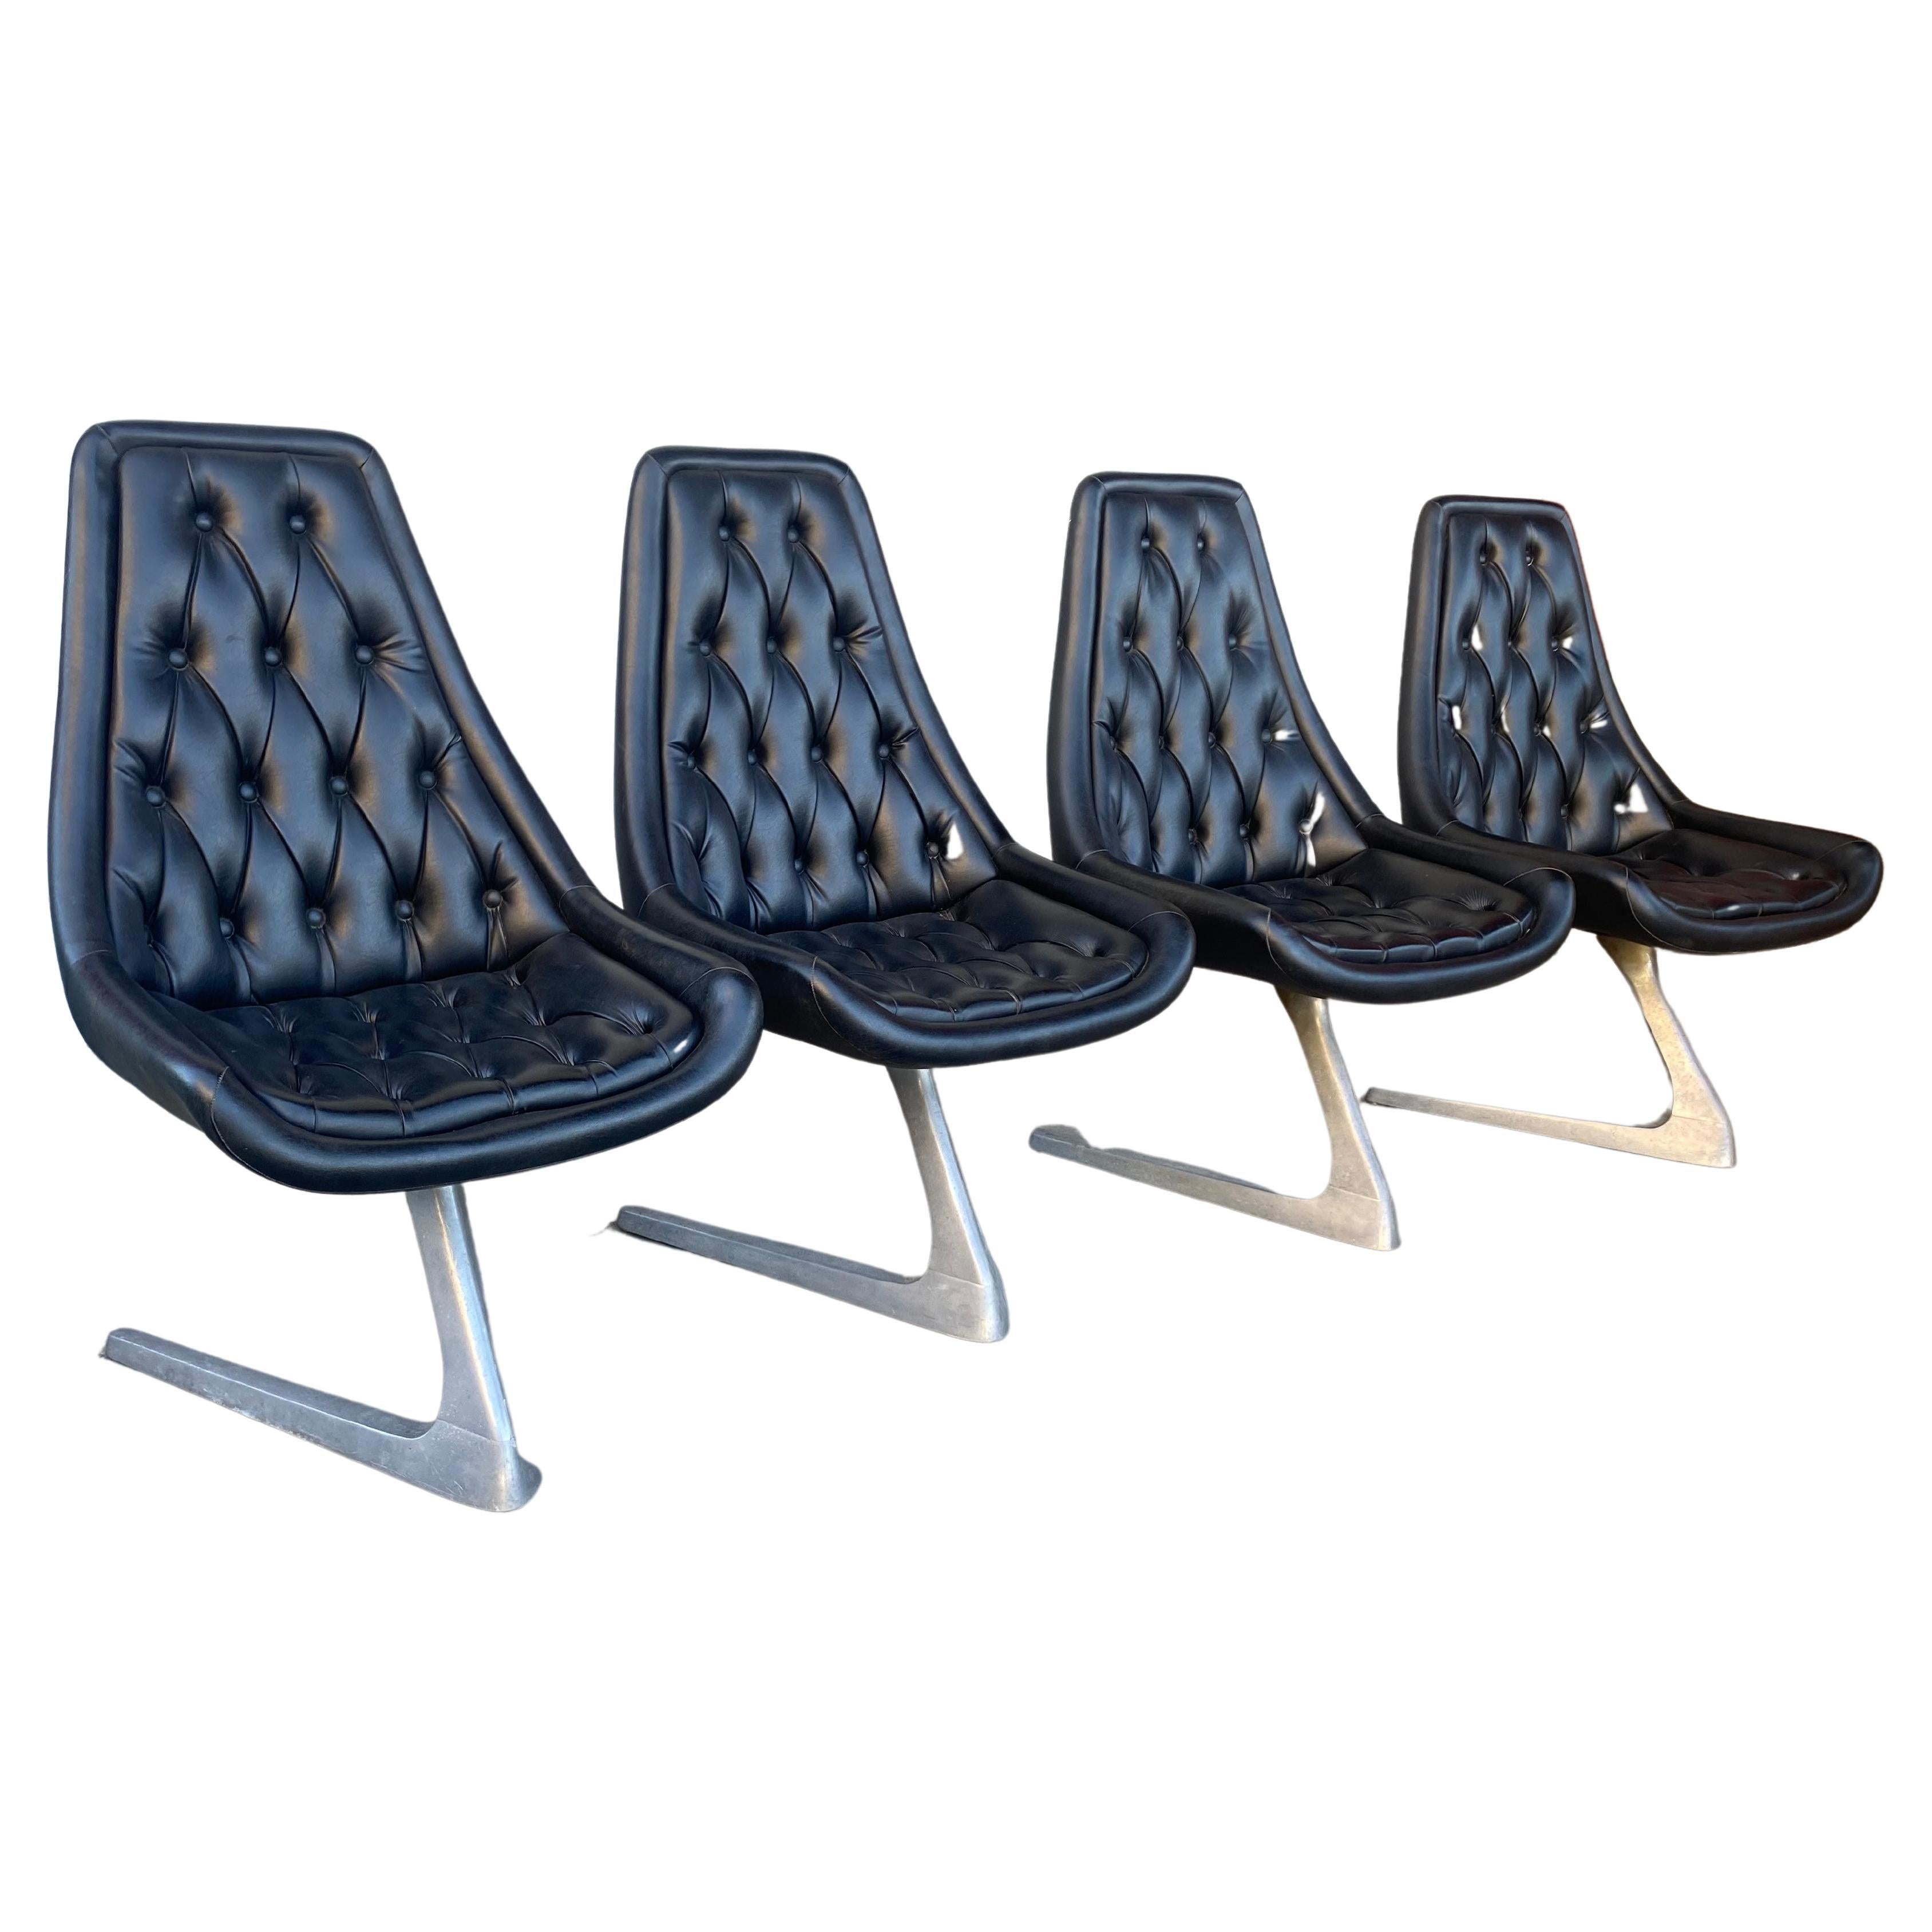 Star Trek Chairs - 3 For Sale on 1stDibs | star trek office chair 